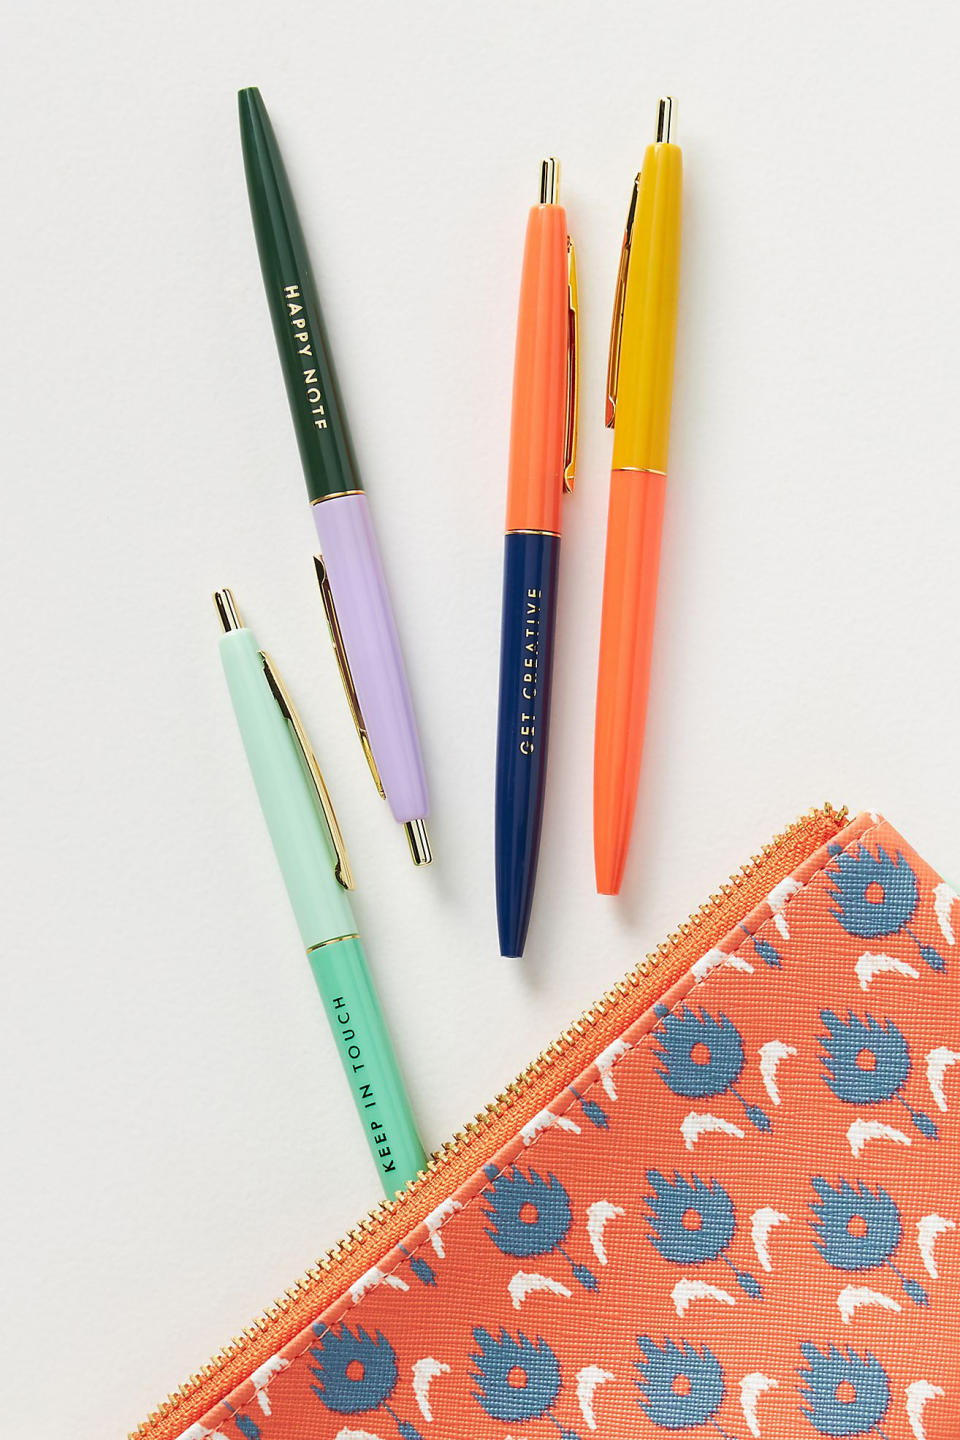 Pencil & Paper Co. Take Note Pens